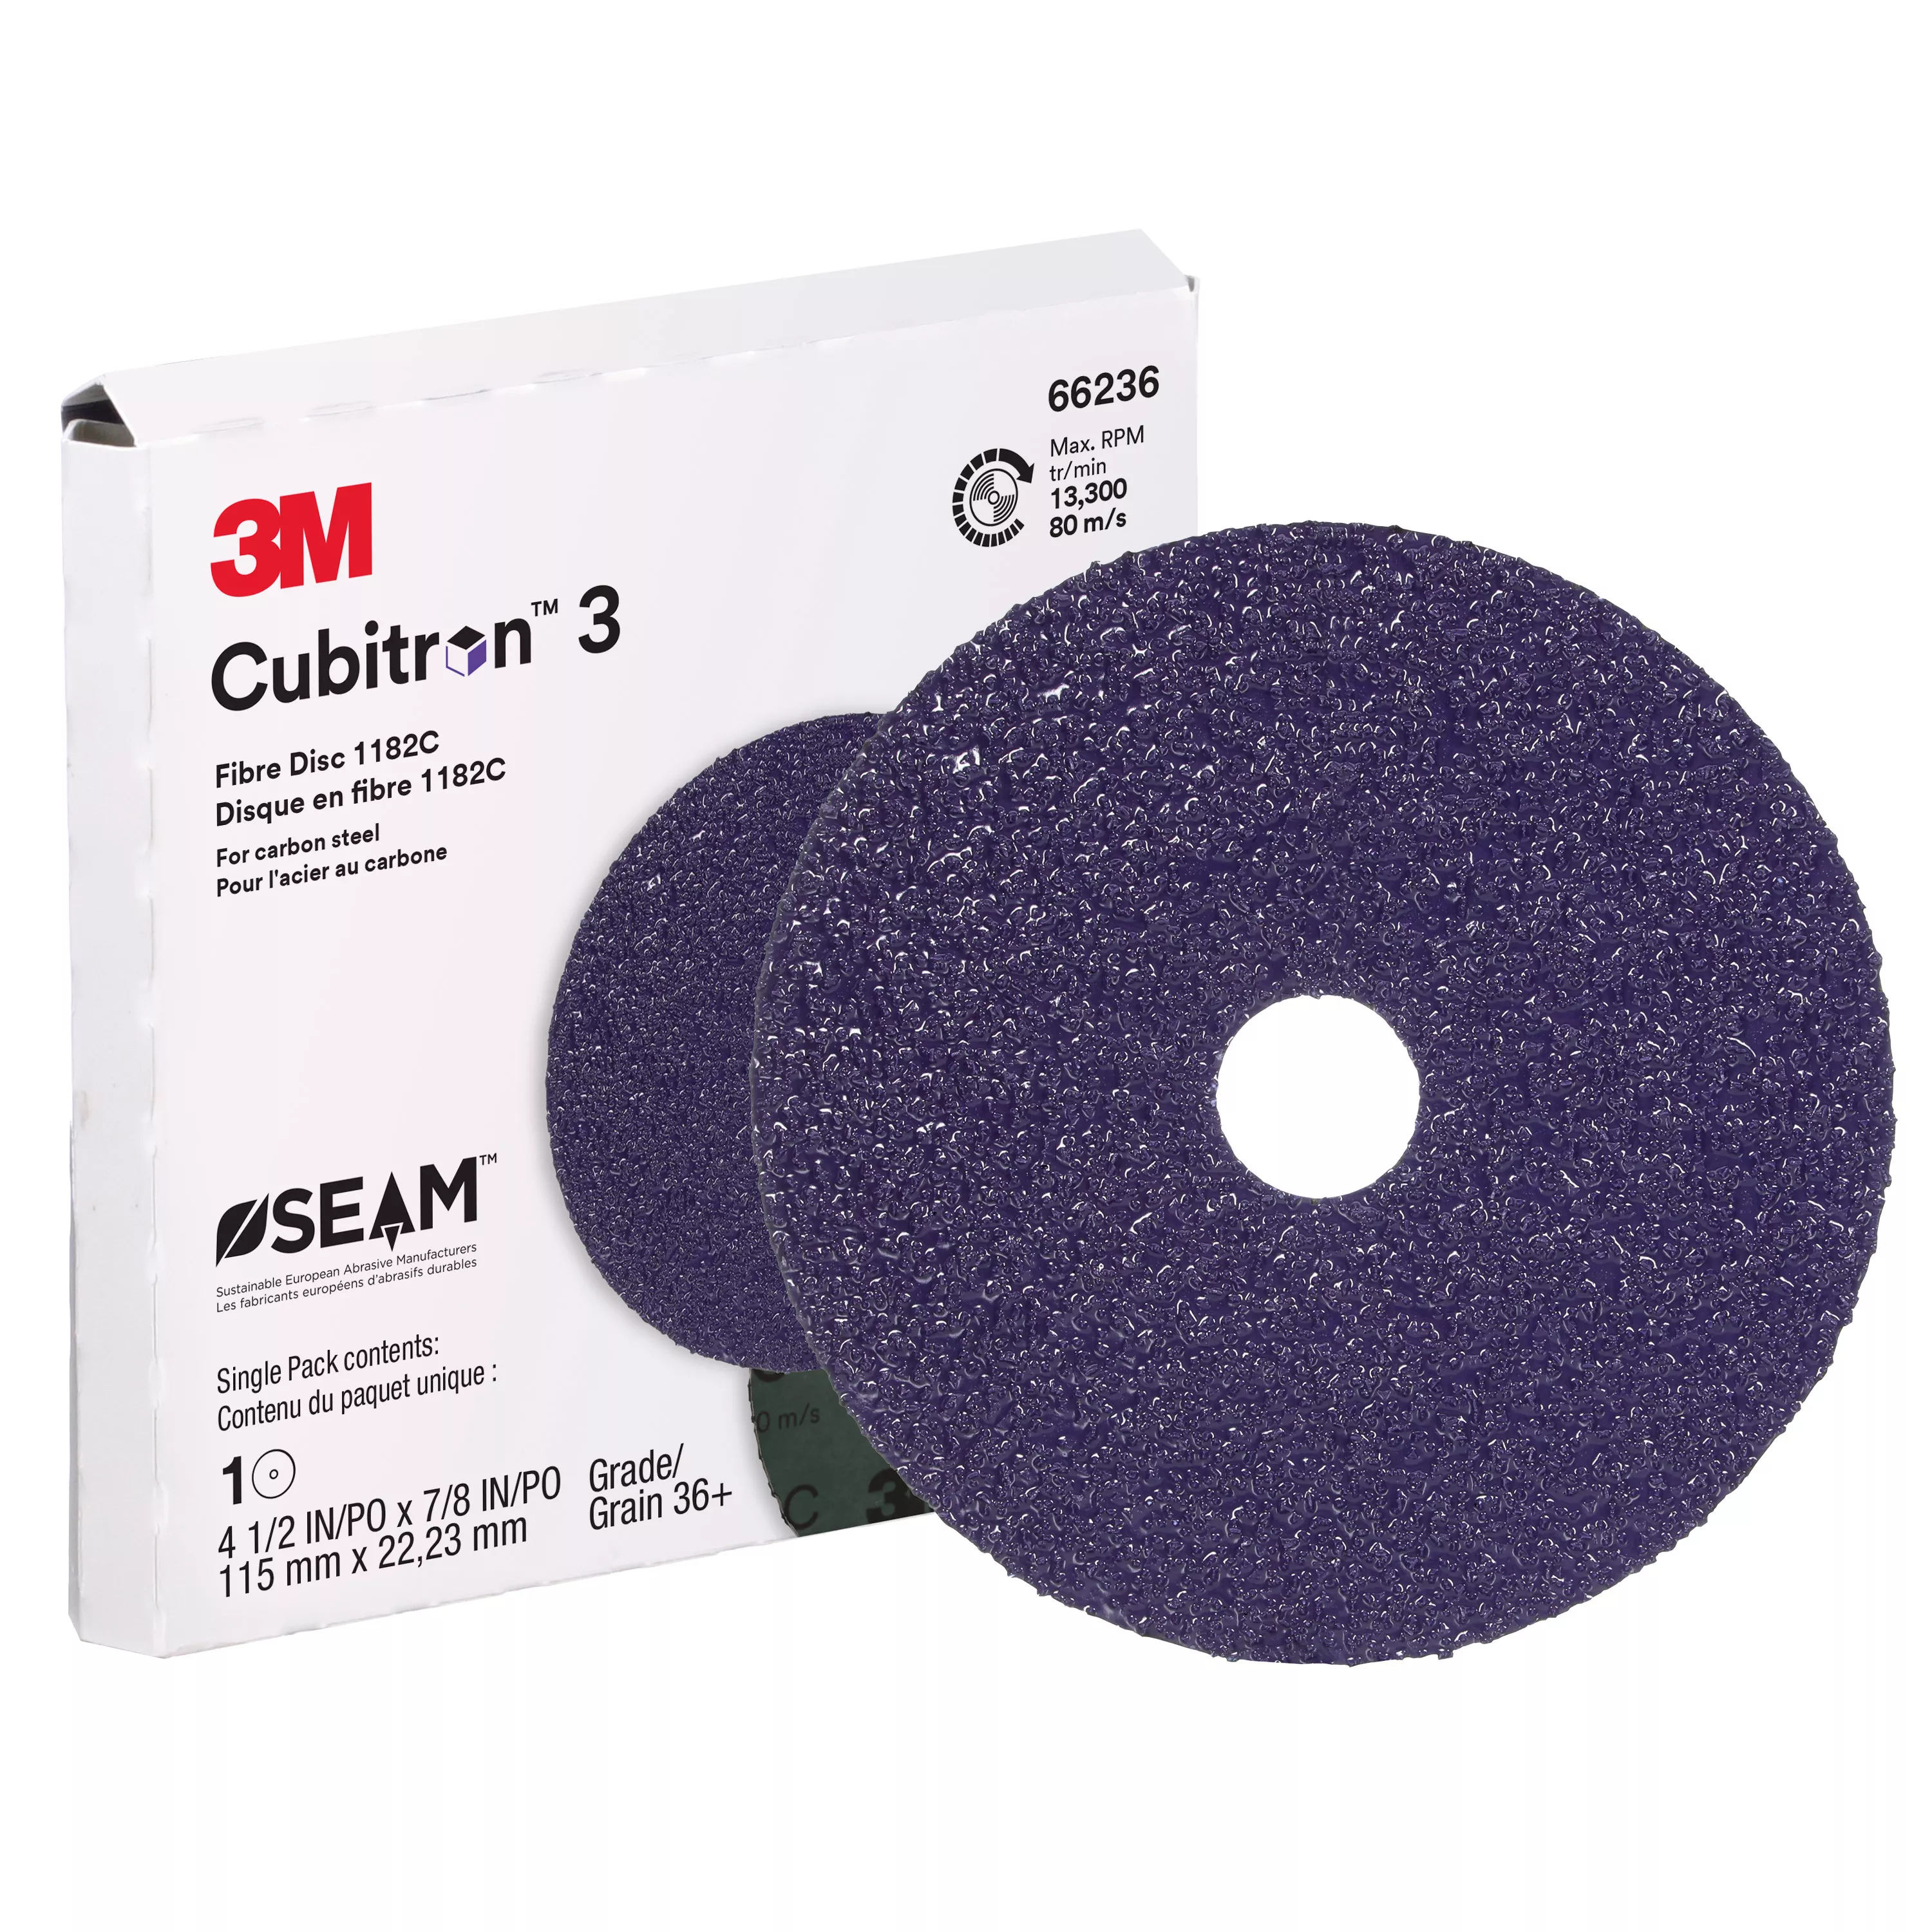 3M™ Cubitron™ 3 Fibre Disc 1182C, 36+, 4-1/2 in x 7/8 in, Die 450E, 10 ea/Case, Single Pack